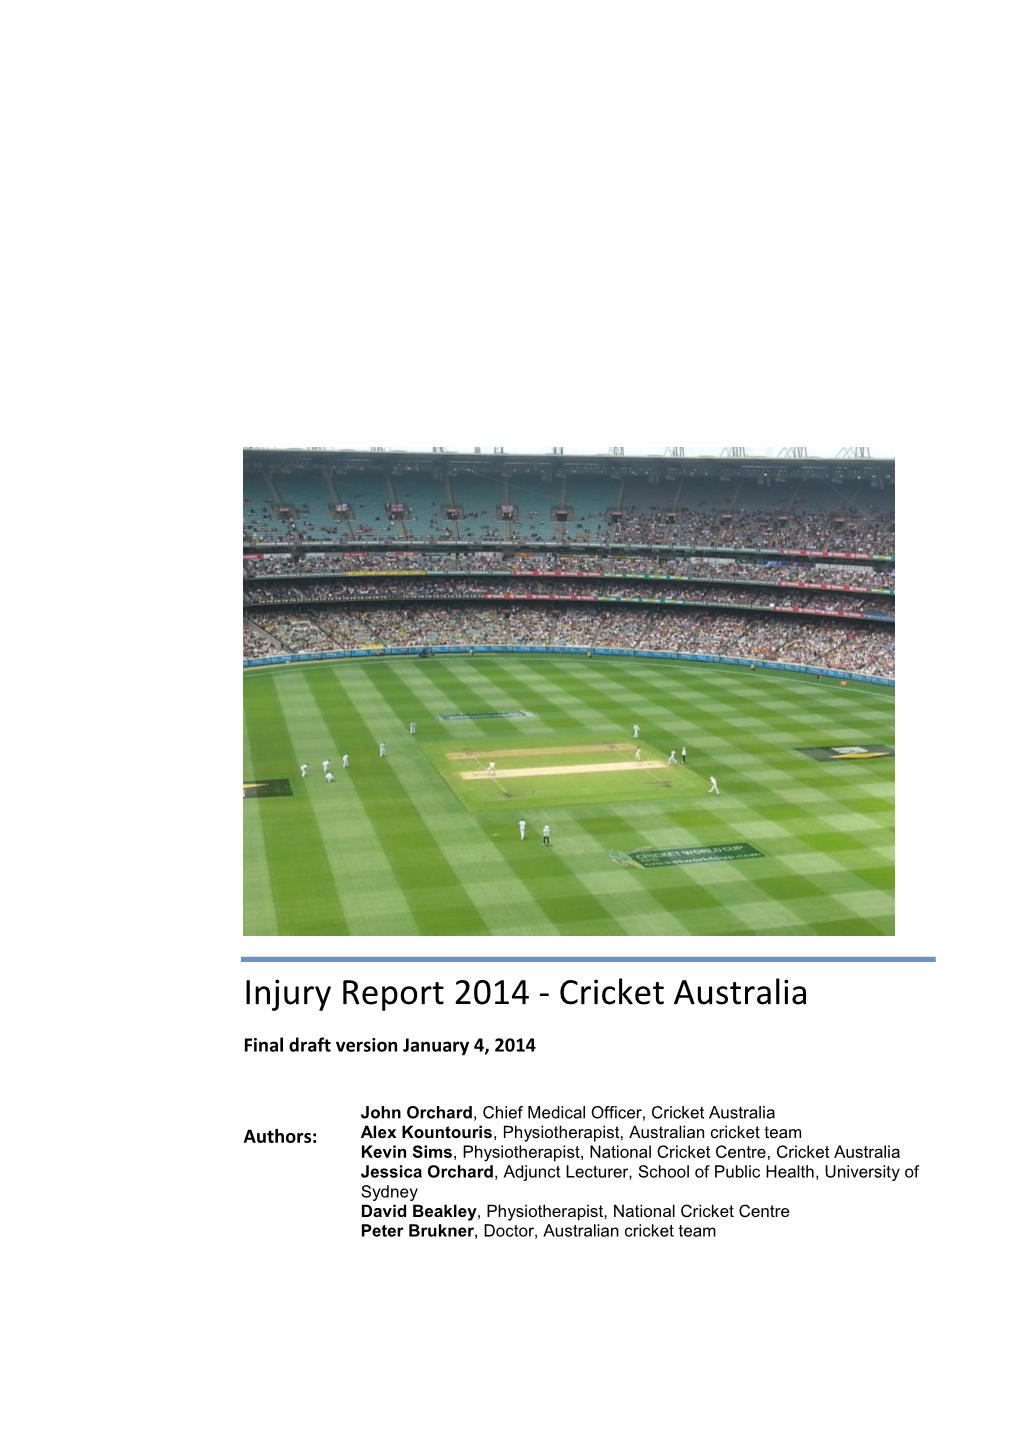 Injury Report 2009